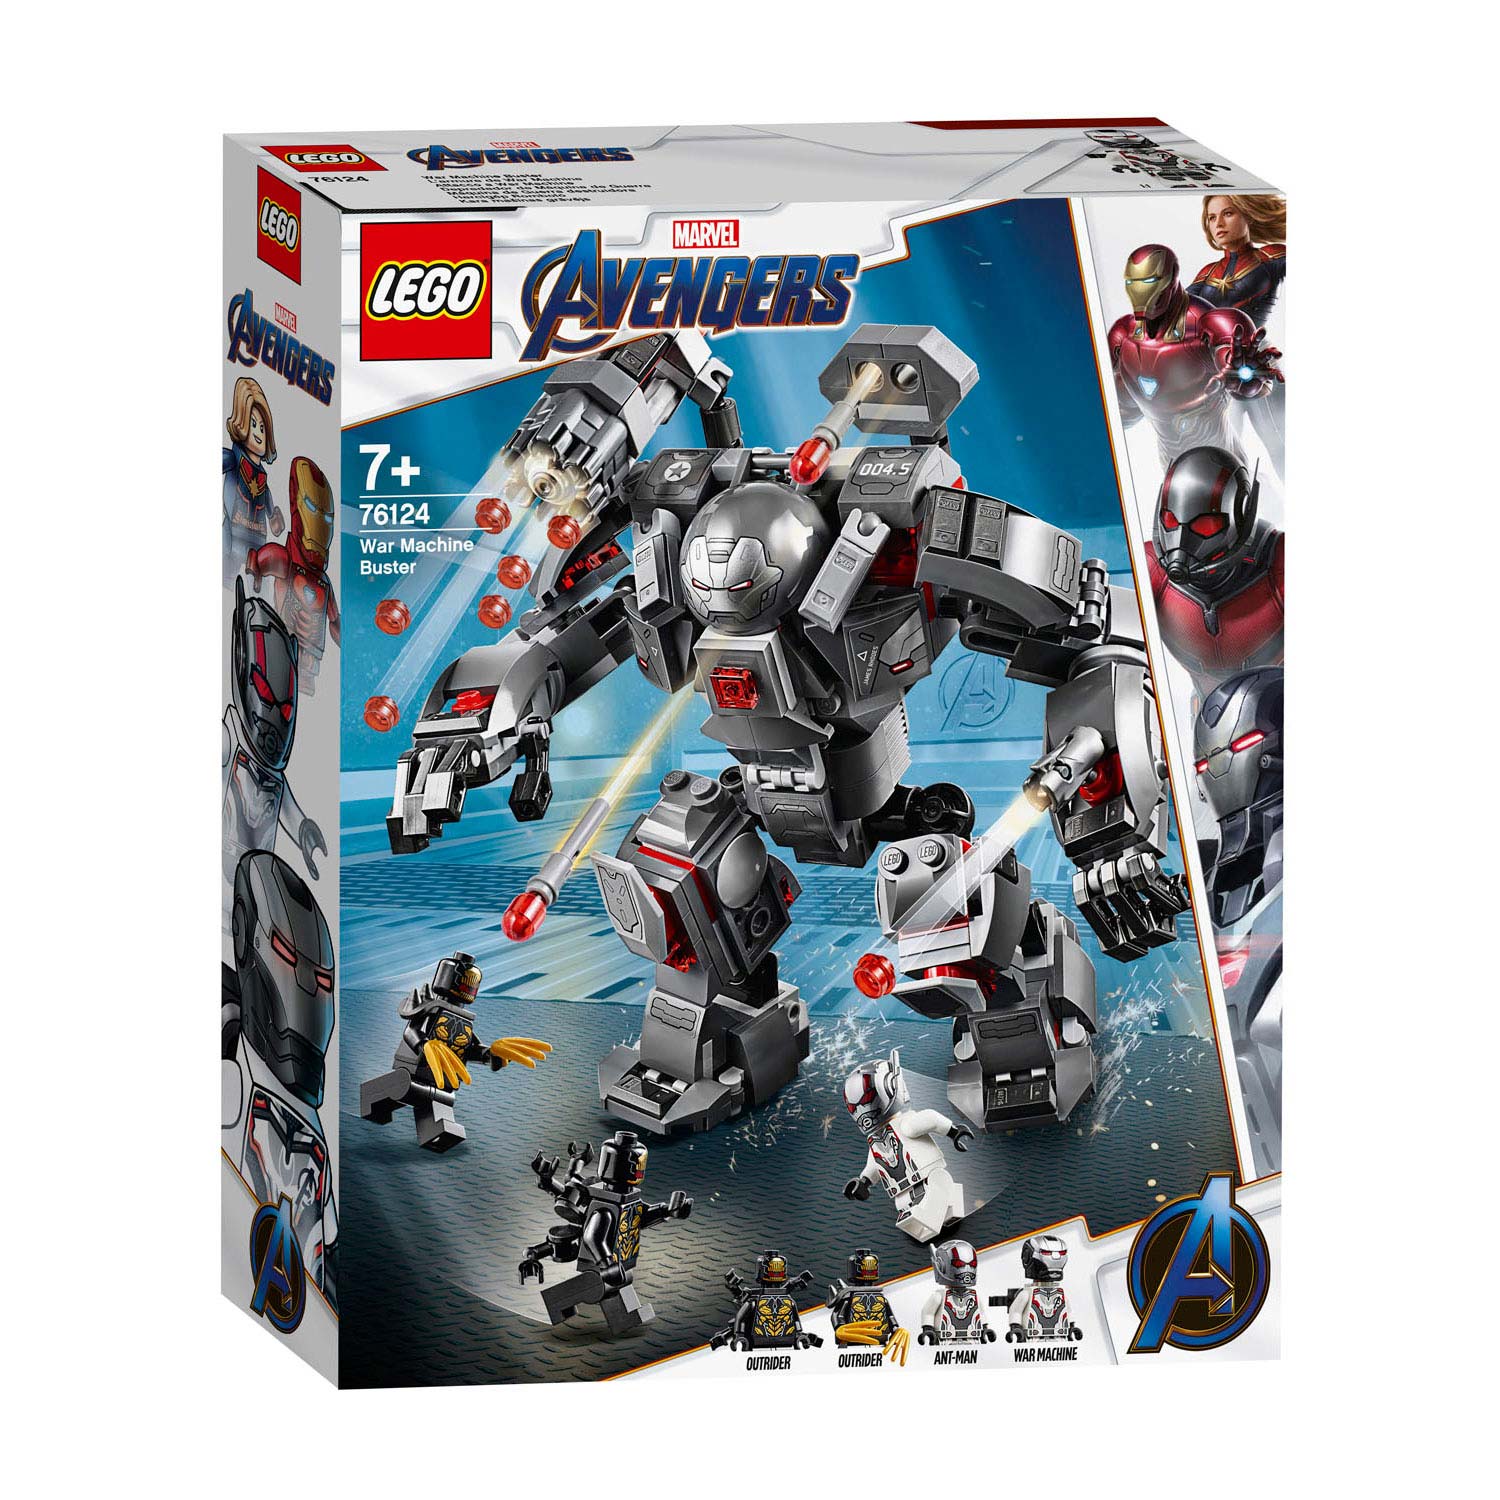 Lego Super Heroes 76124 War Machine Buster